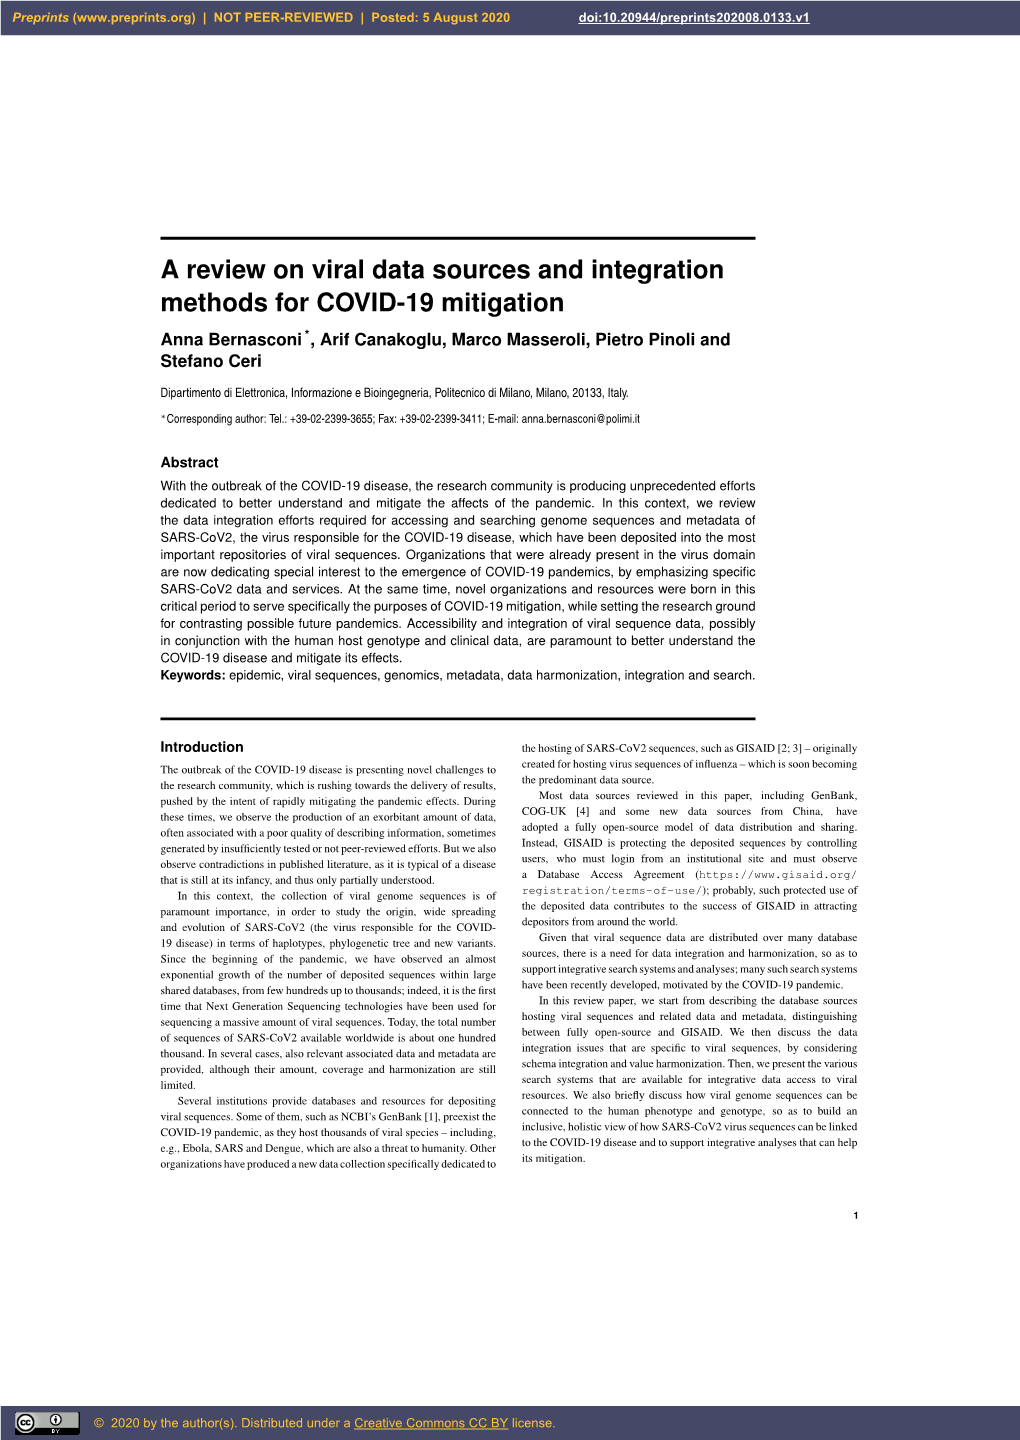 A Review on Viral Data Sources and Integration Methods for COVID-19 Mitigation Anna Bernasconi *, Arif Canakoglu, Marco Masseroli, Pietro Pinoli and Stefano Ceri